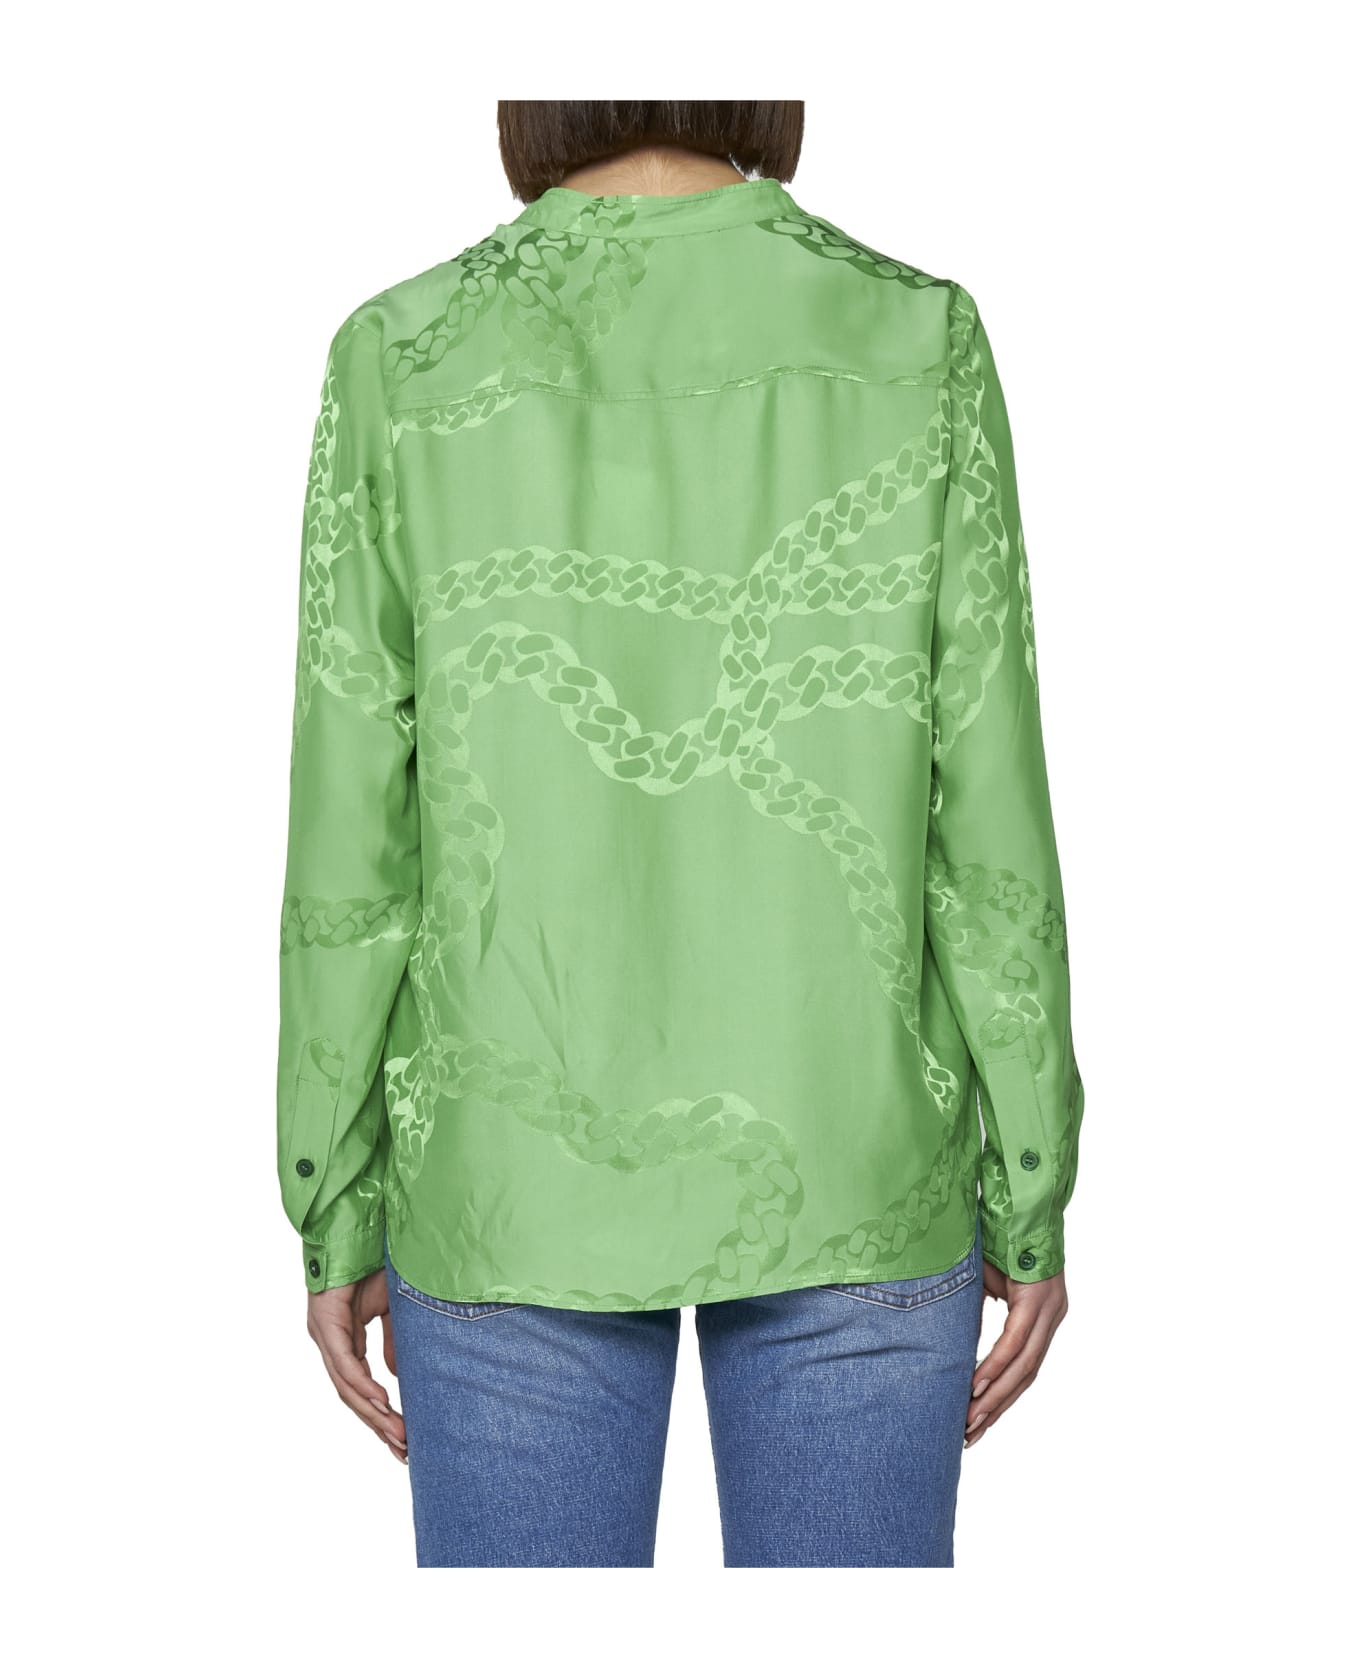 Stella McCartney Shirt - Bright green